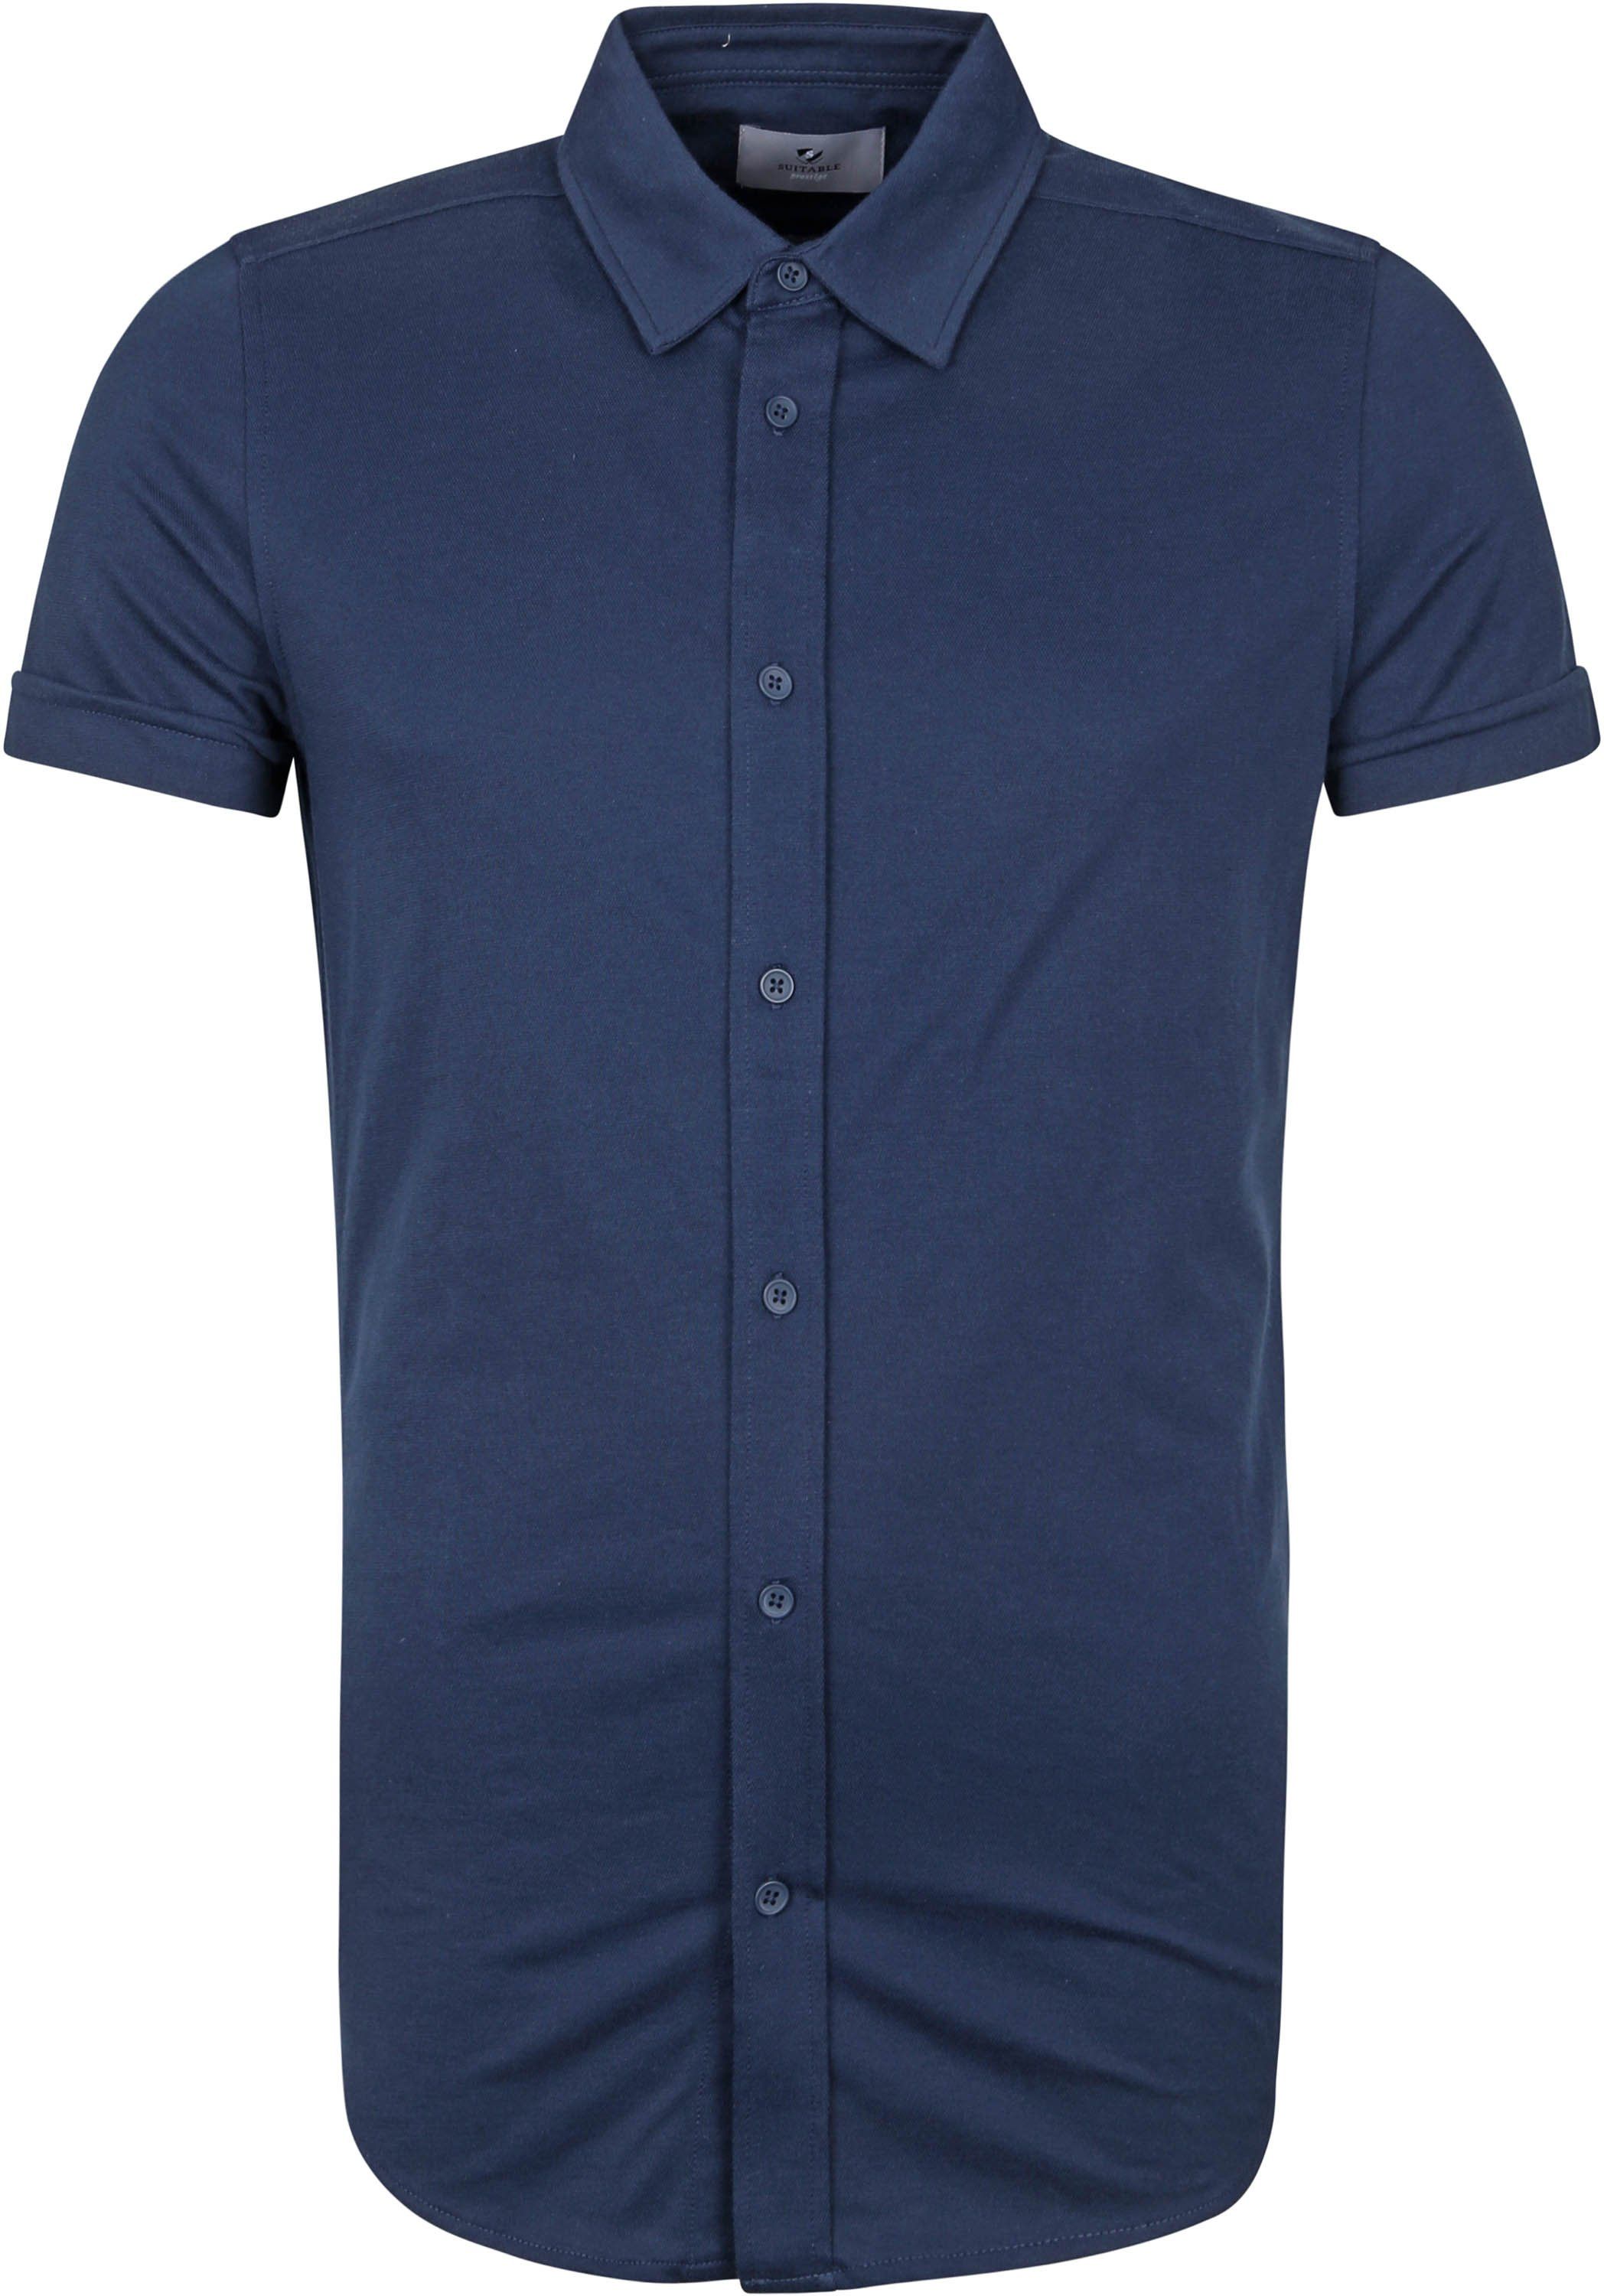 Suitable Prestige Earl Short Sleeve Shirt Navy Blue Dark Blue size L